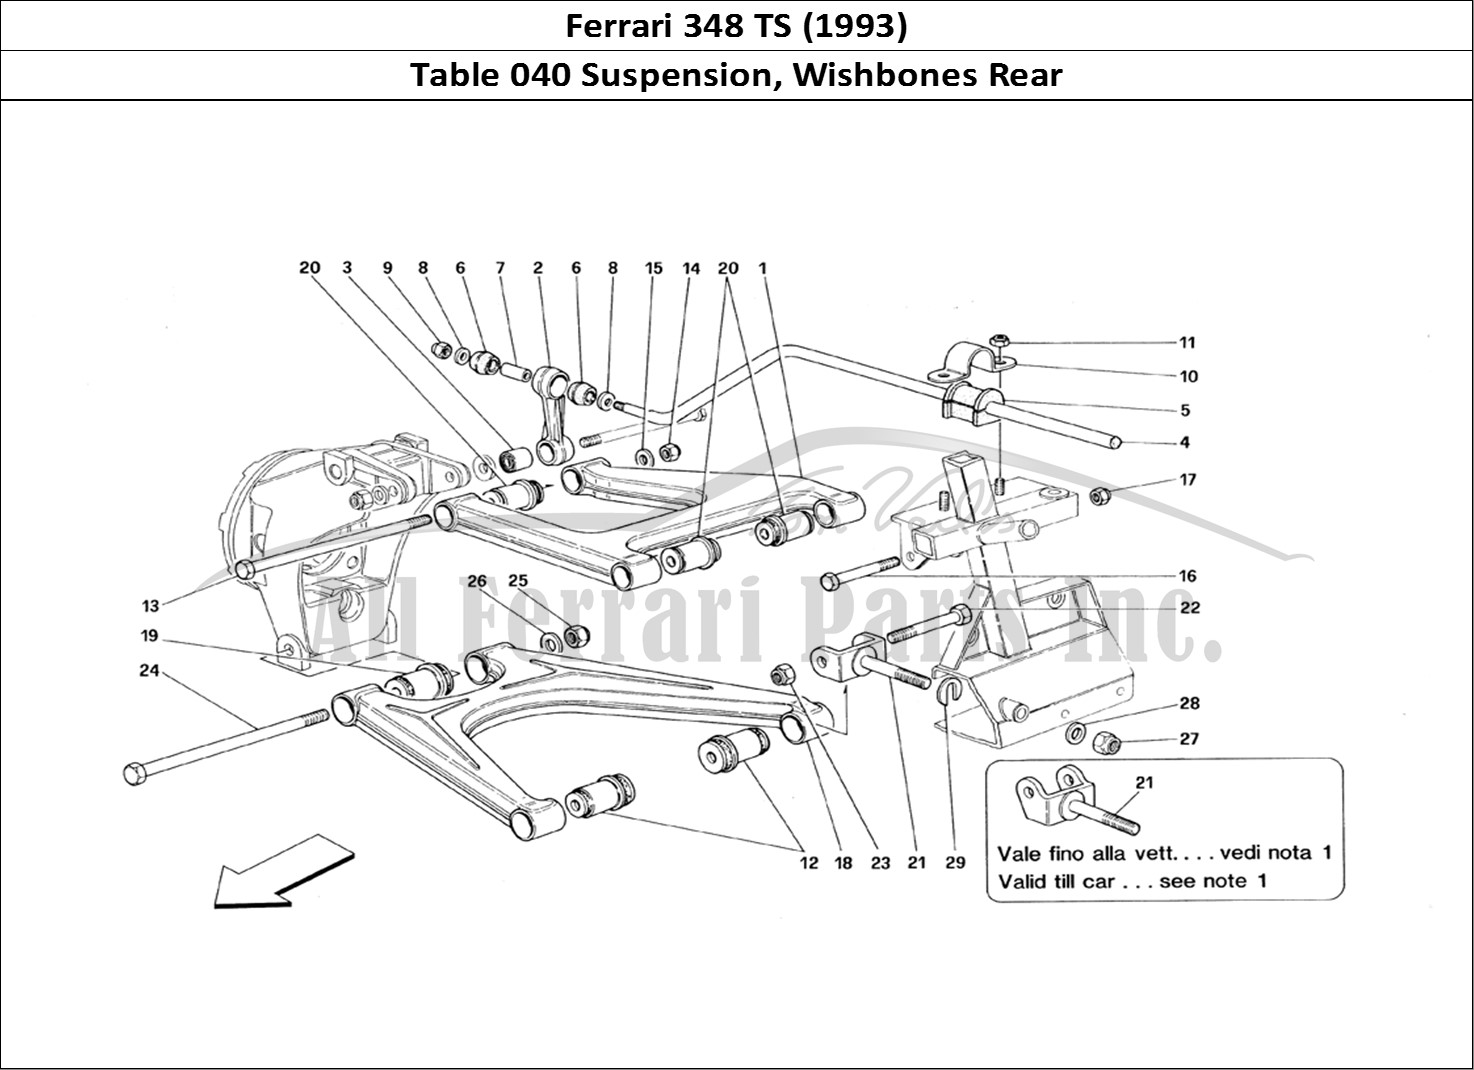 Ferrari Parts Ferrari 348 TB (1993) Page 040 Rear Suspension - Wishbon